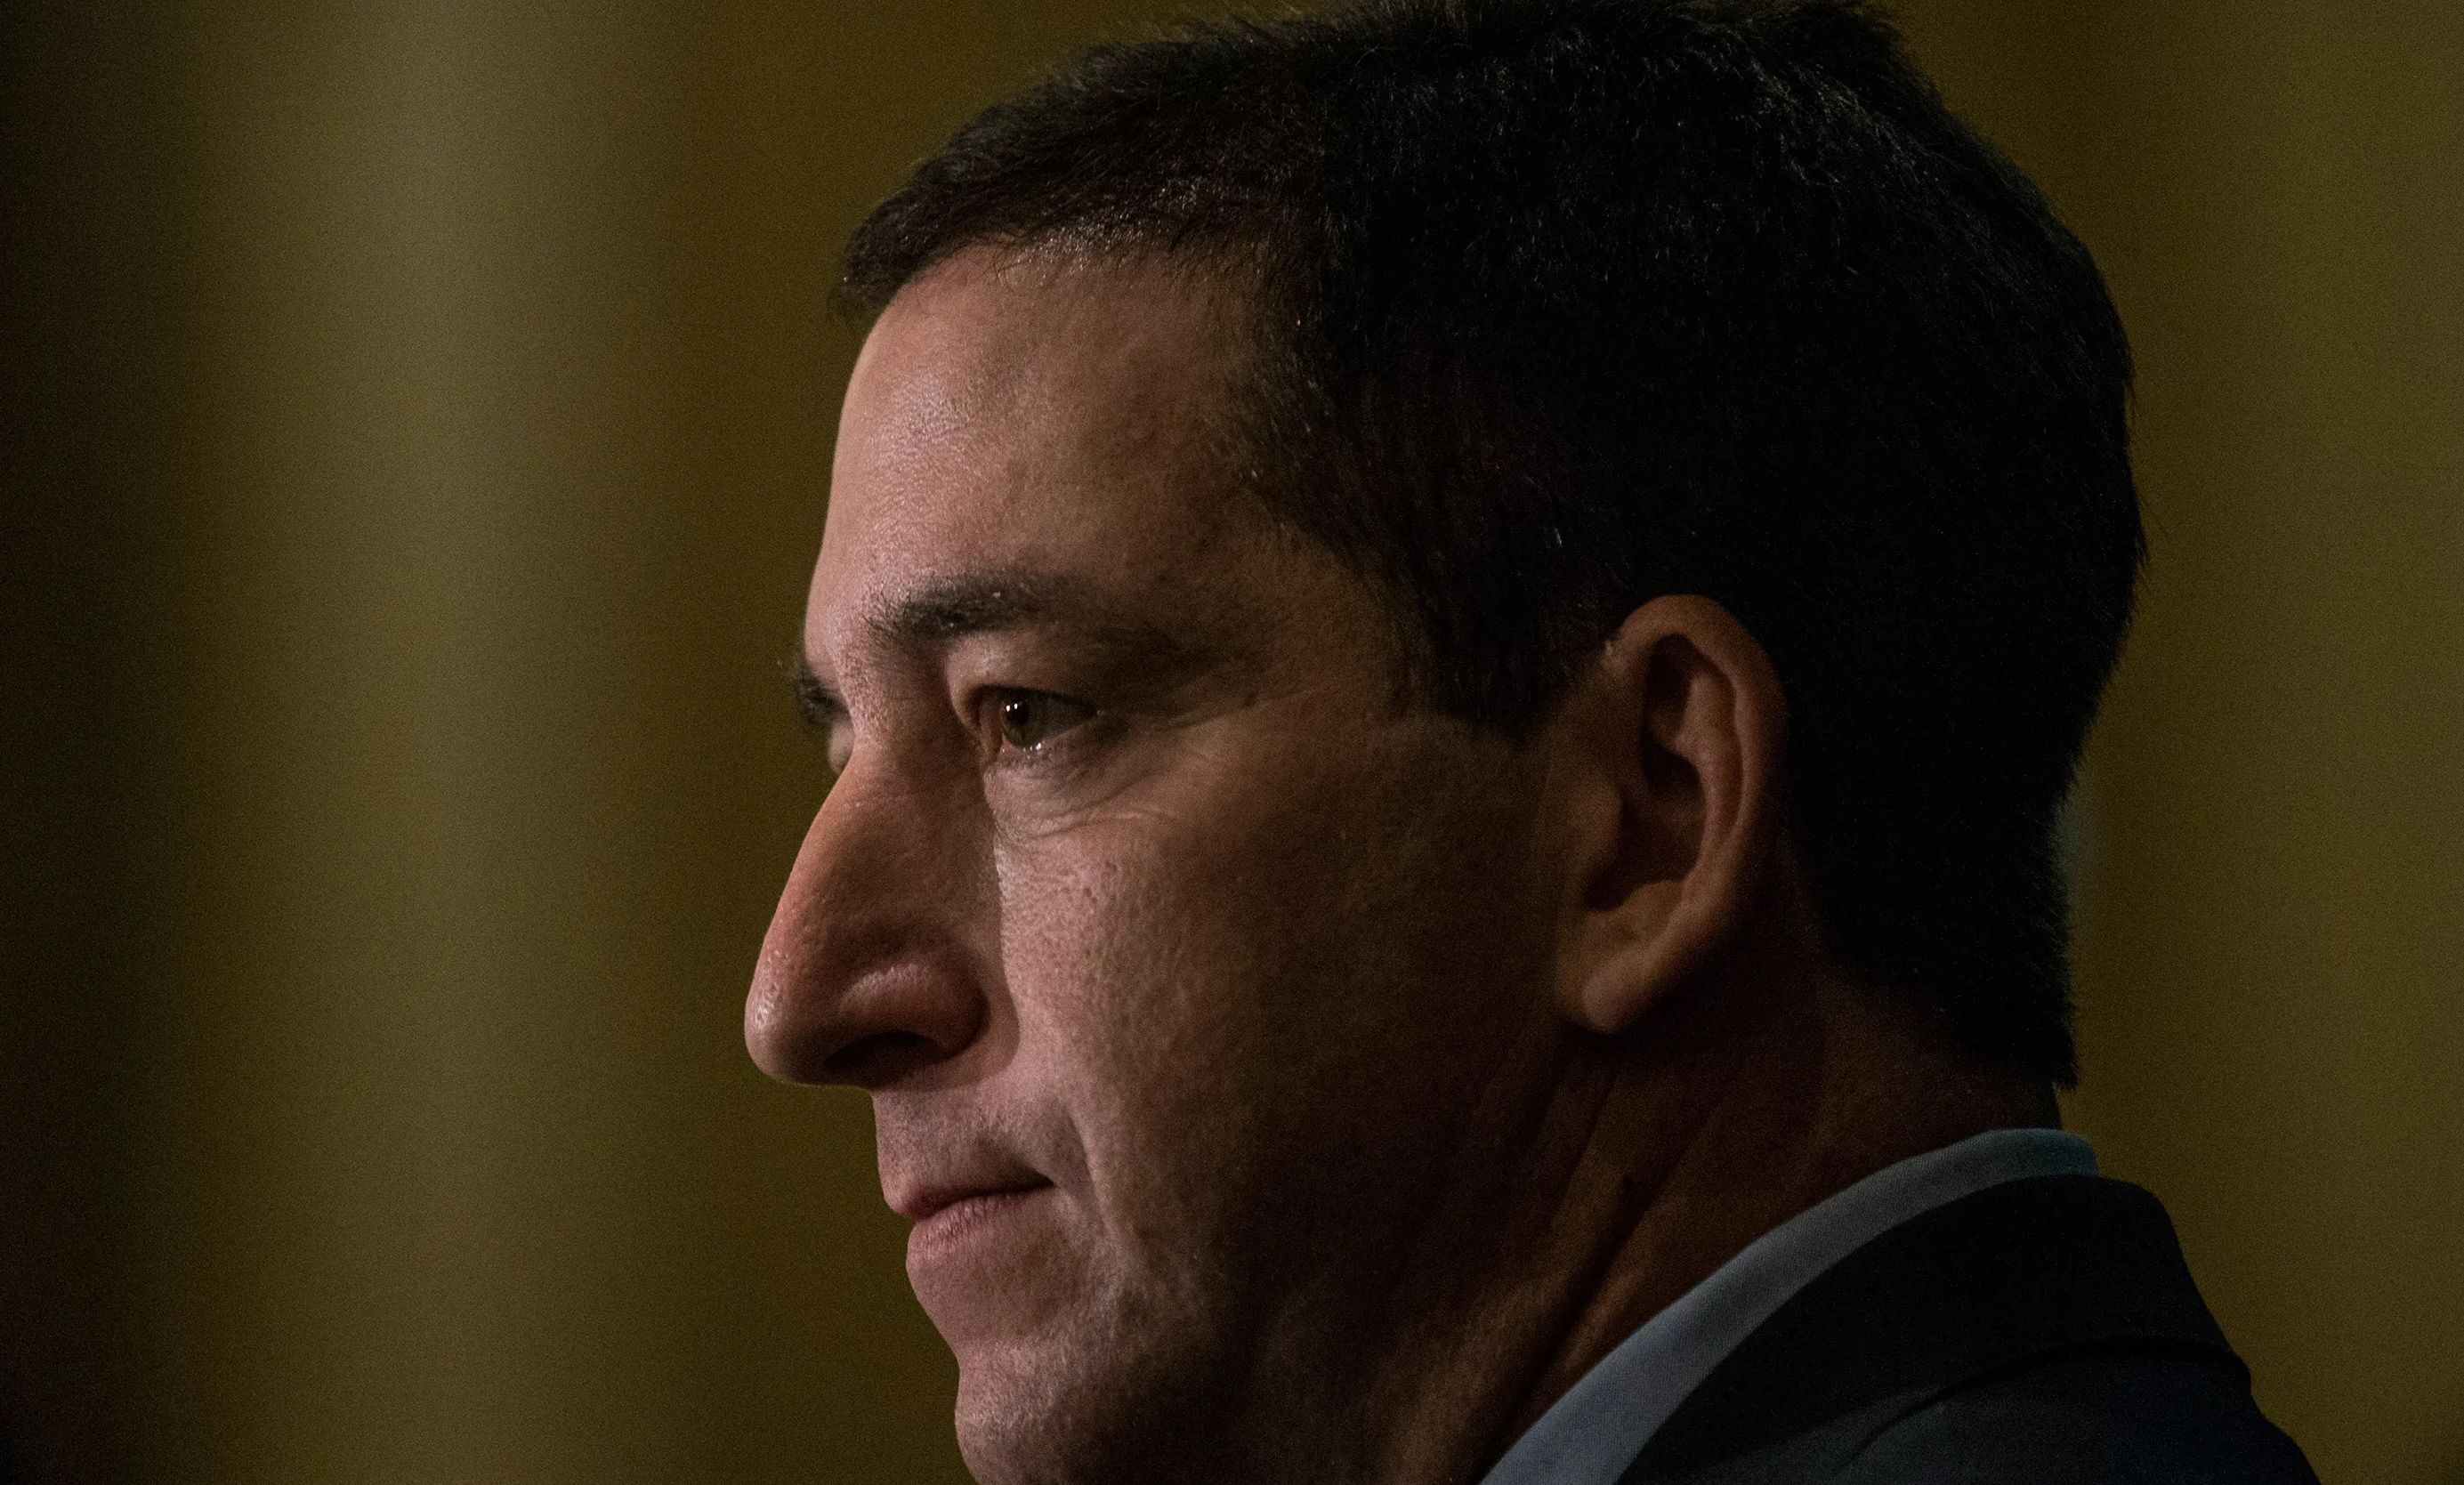 Pulitzer prize-winning reporter Glenn Greenwald looks on.